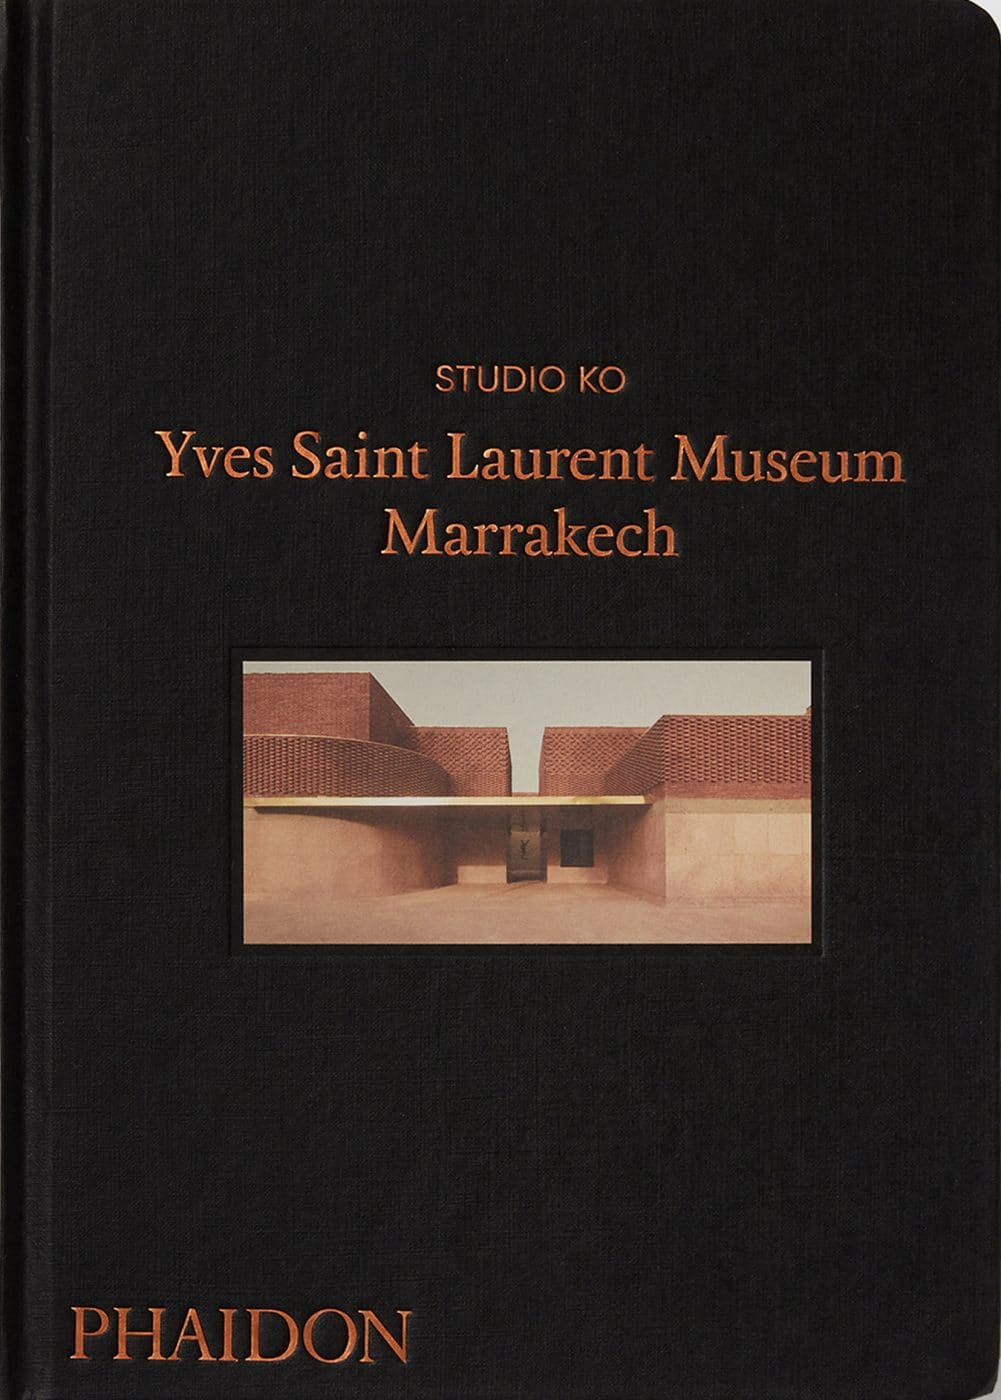 The front cover of Studio KO: Yves Saint Laurent Museum Marrakech